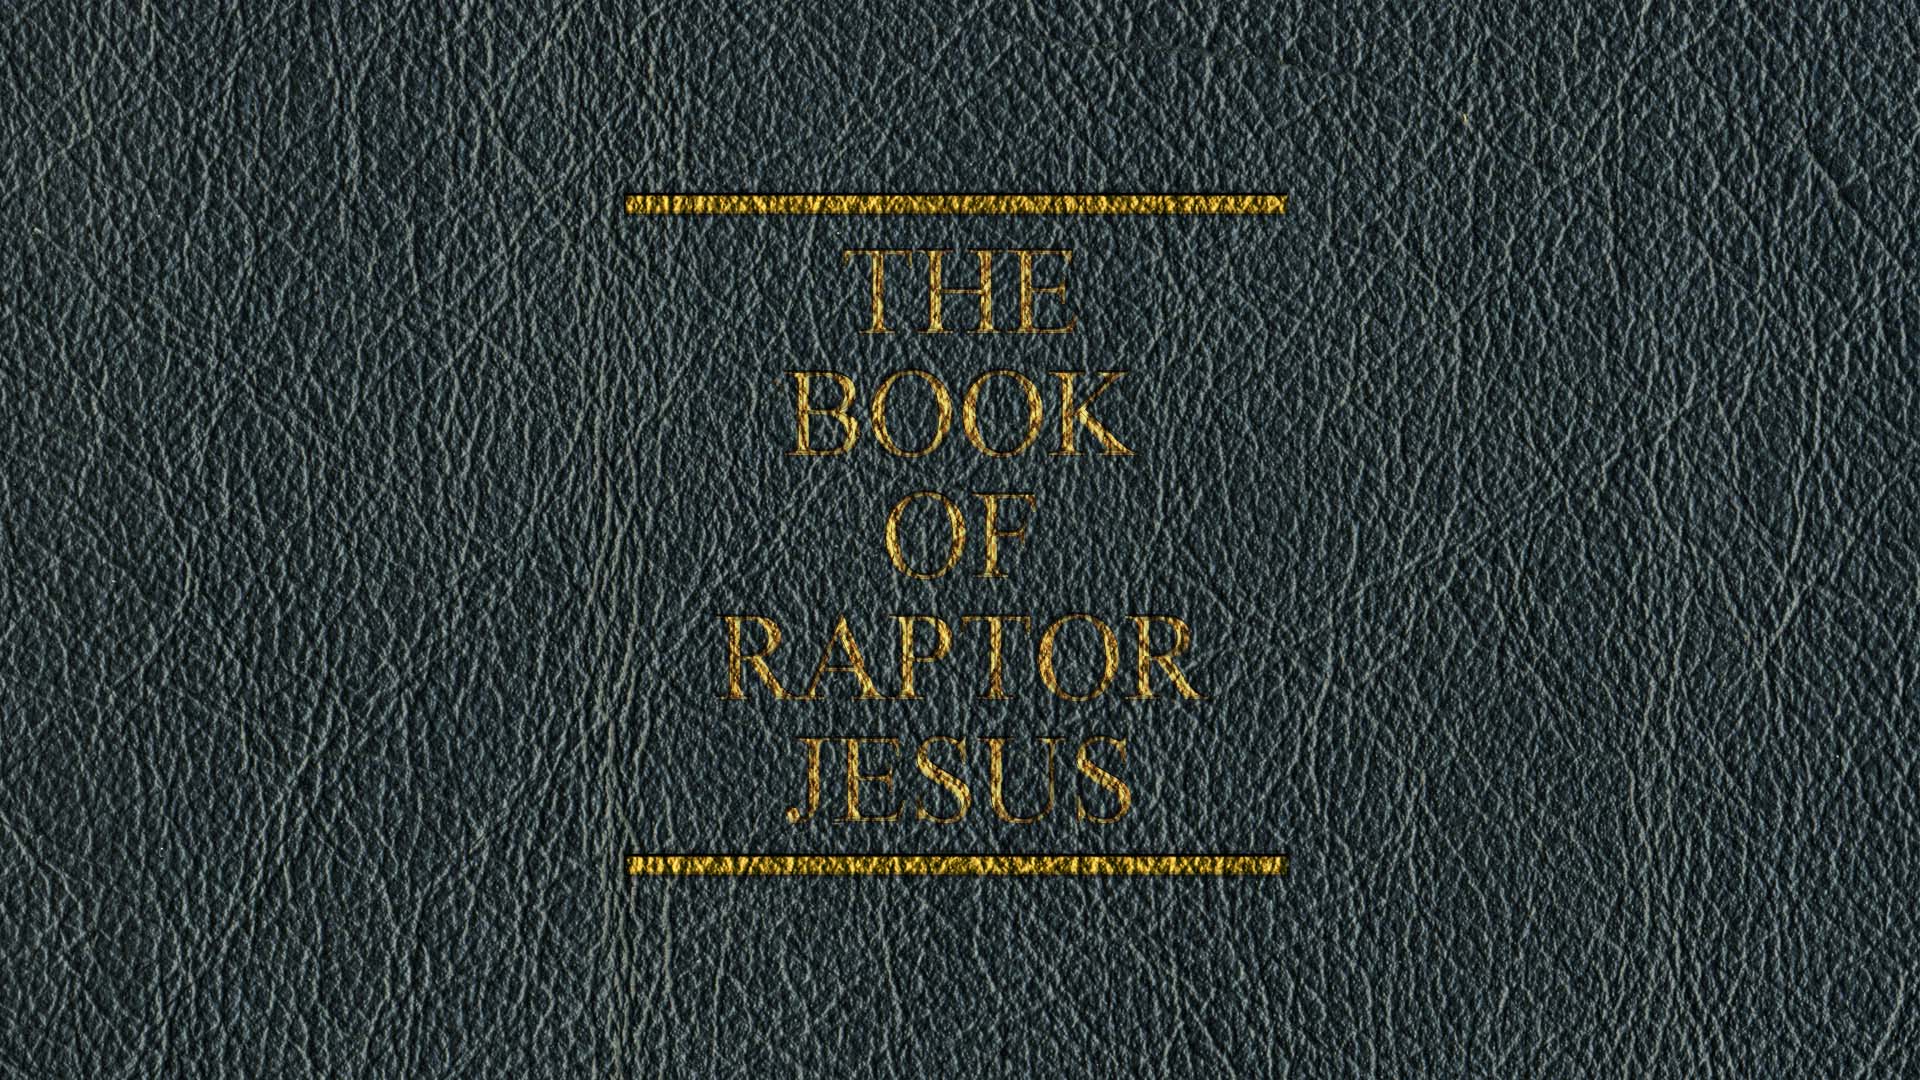 Raptor Jesus, Bible, books - desktop wallpaper